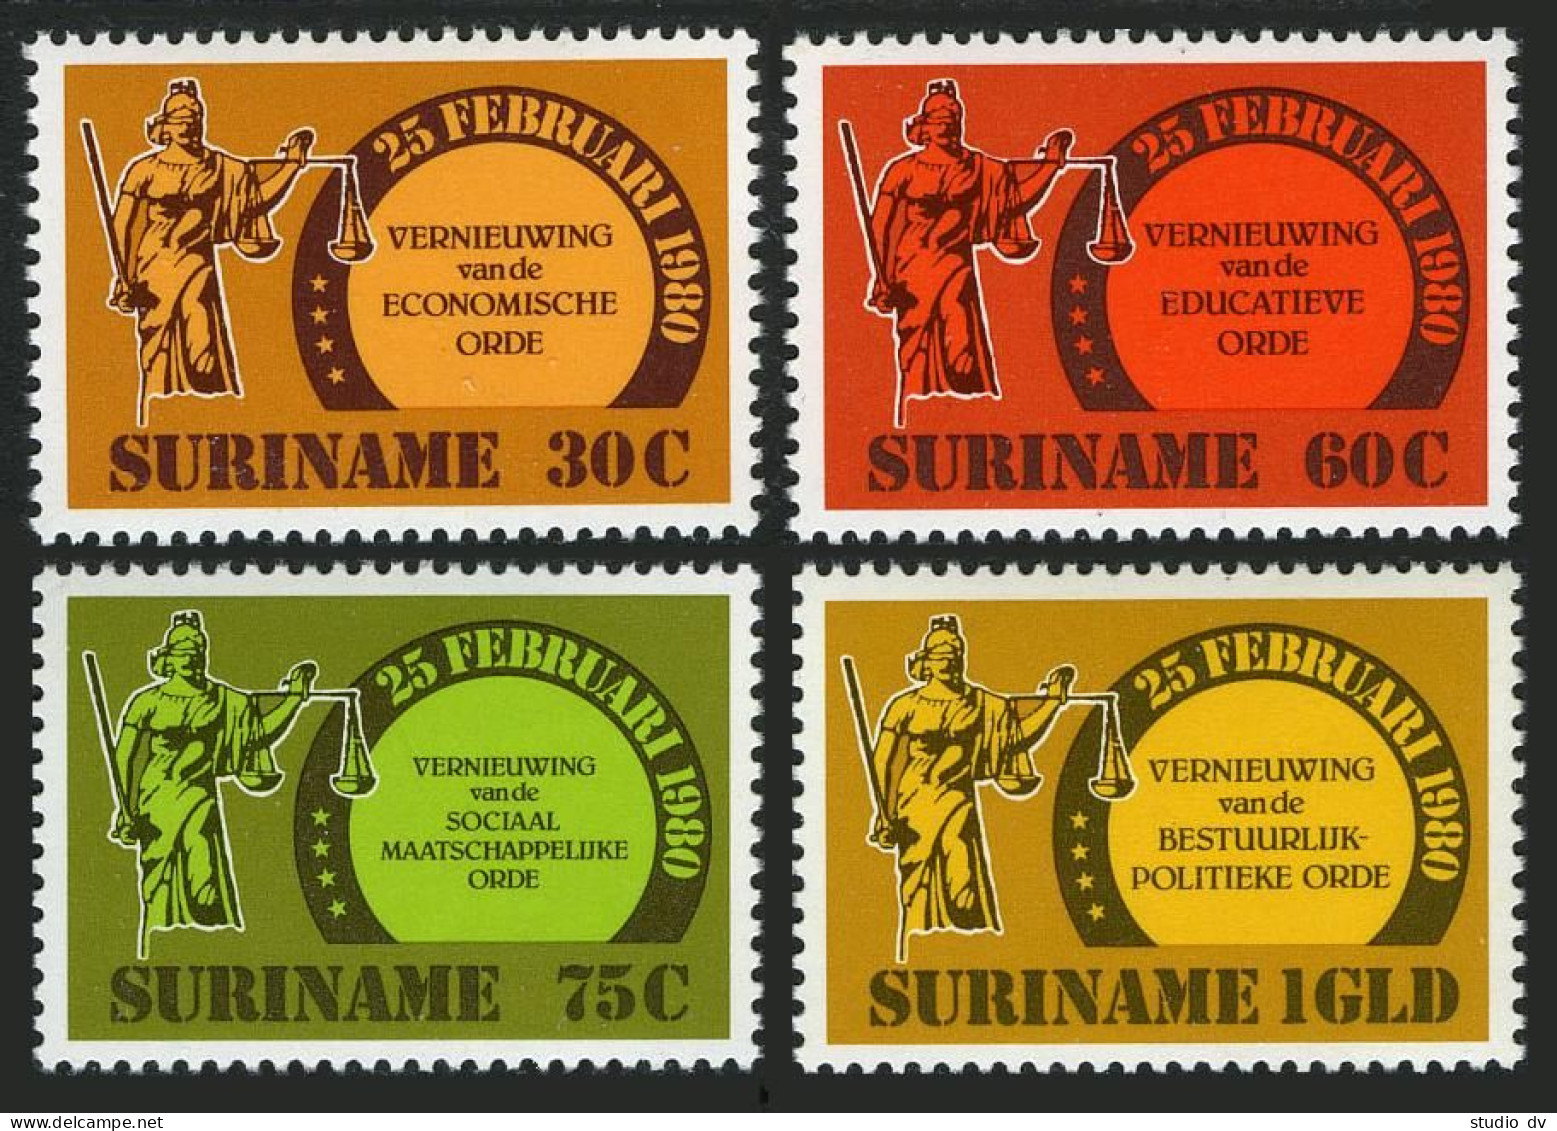 Surinam 568-571,571a Sheet, MNH. Mi 934-937, Bl.28. Government Renovation, 1981. - Suriname